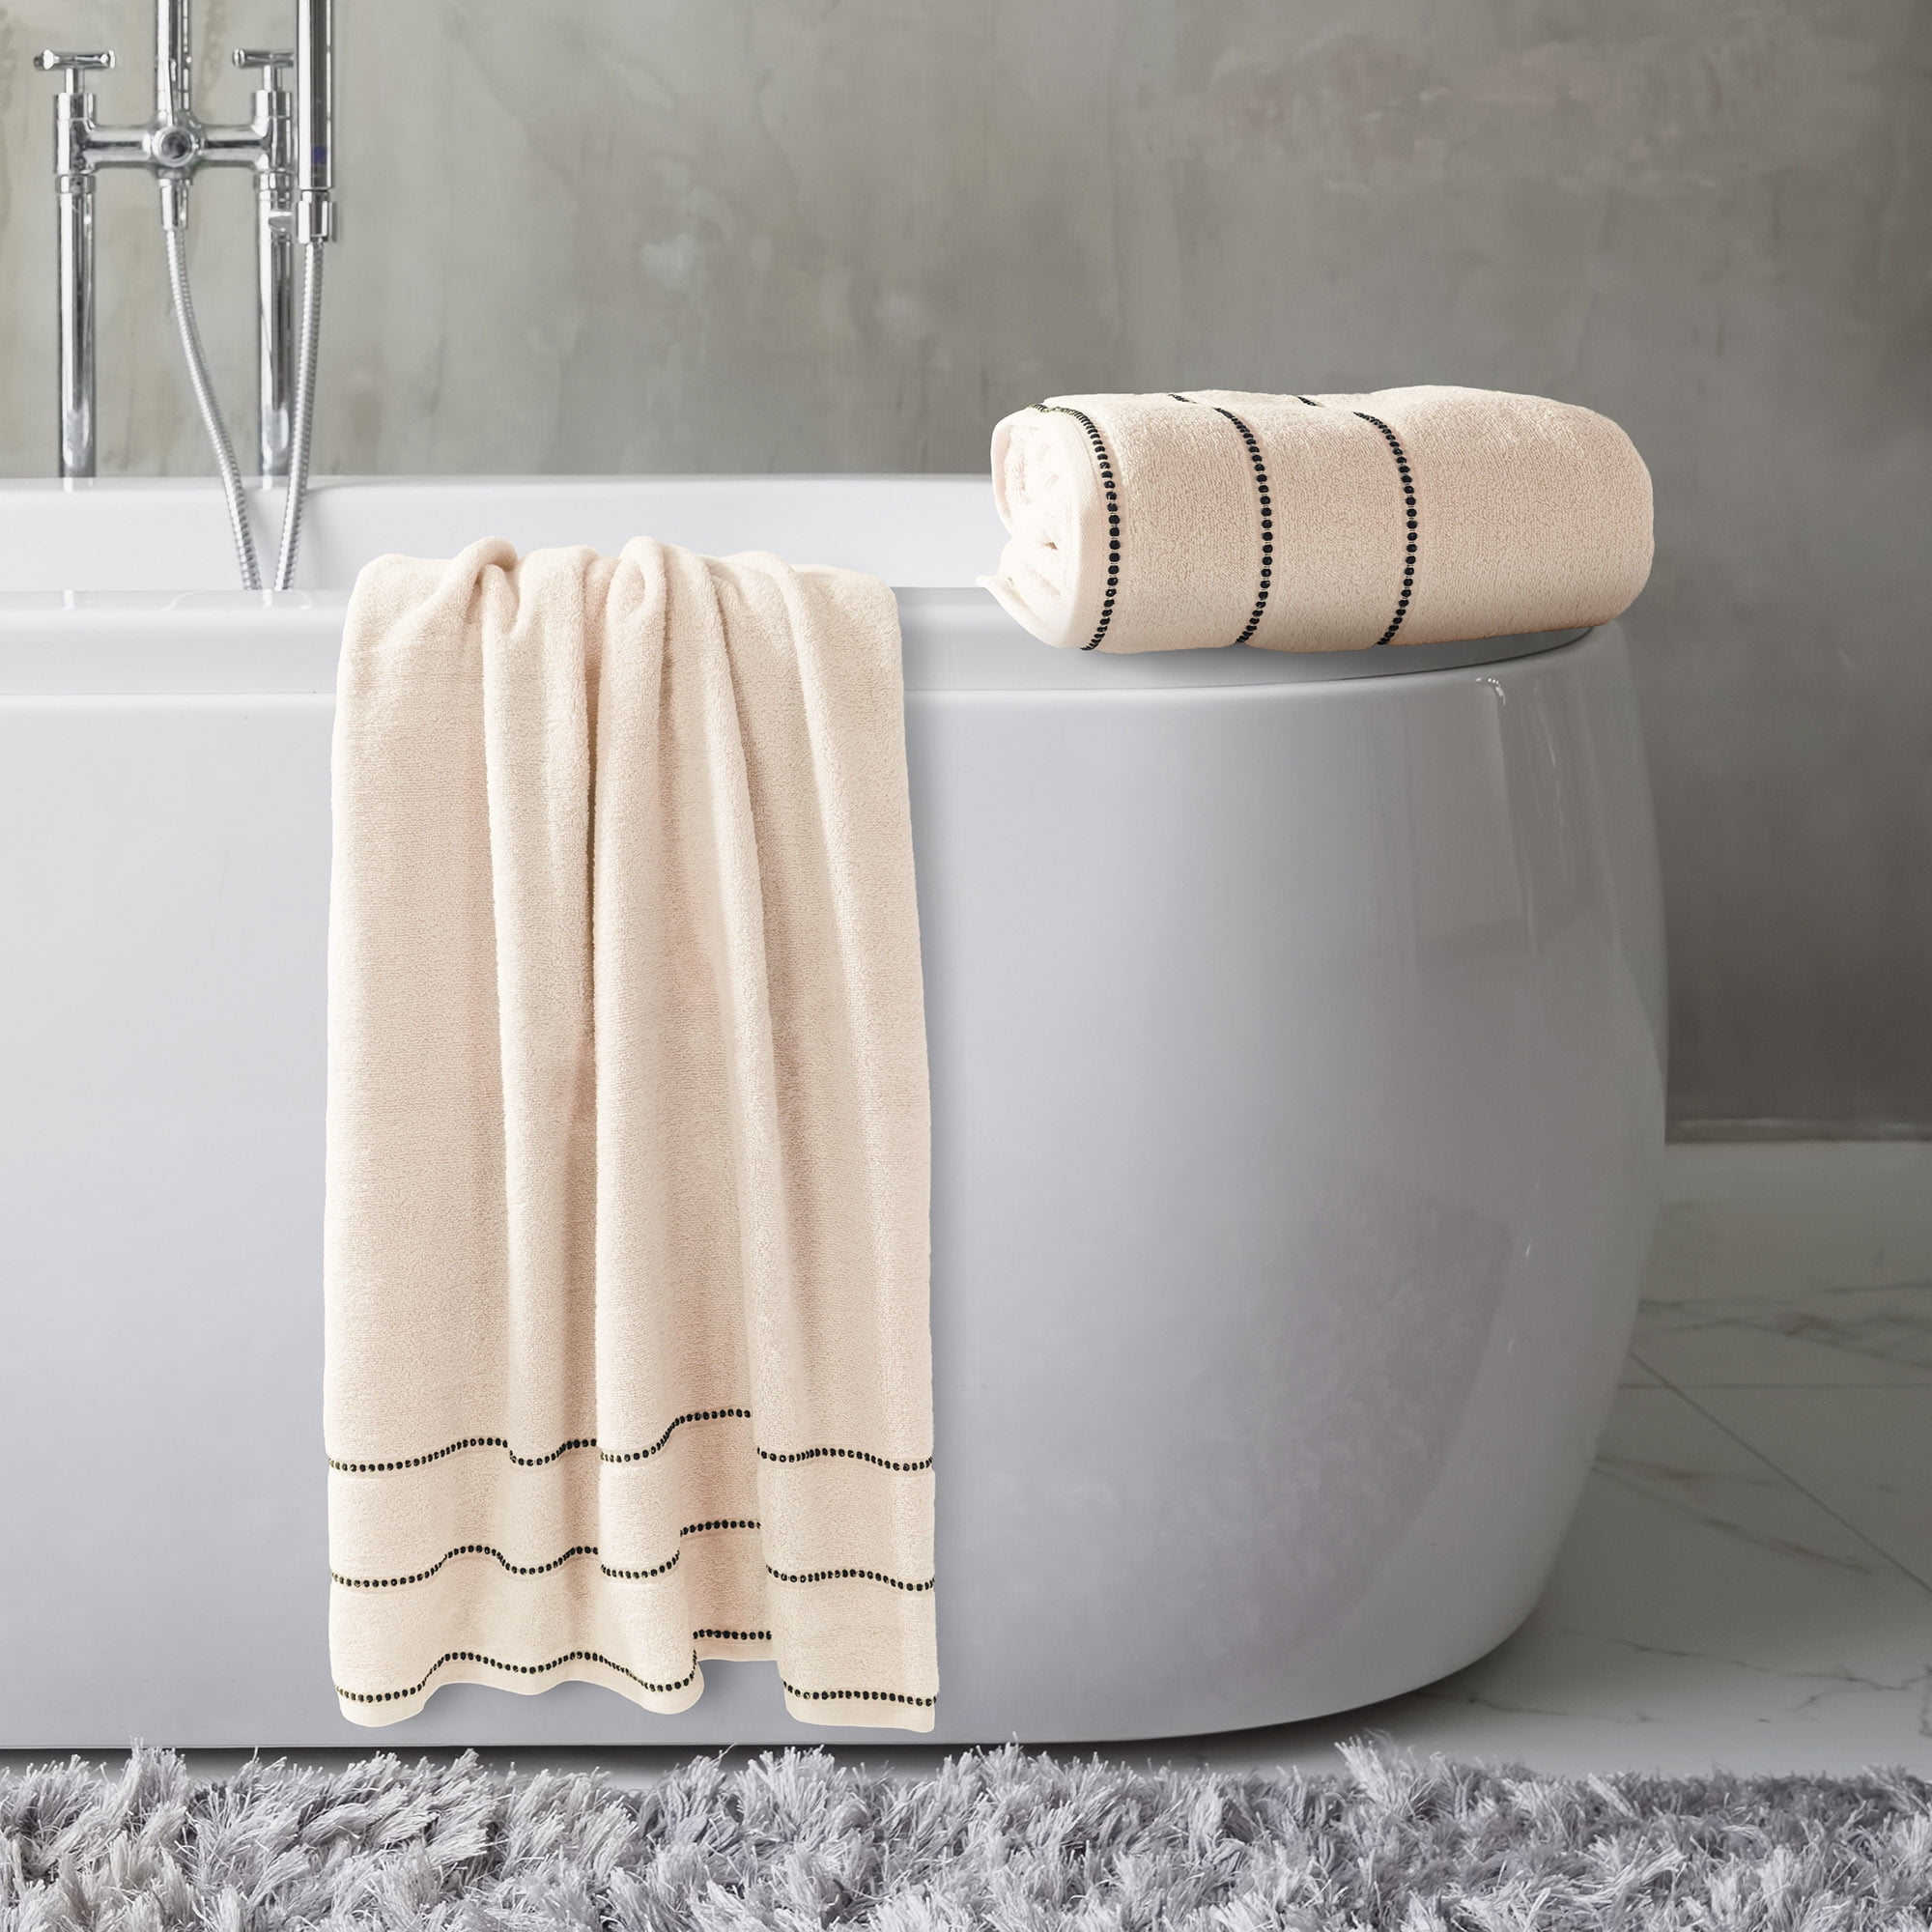 Cotton Craft Bath Towels - 4 Pack Super Zero Twist Bath Towel Set - 100% Cotton 30x54 - Ultra Soft Absorbent Quick Dry 615 GSM Everyday Luxury Hotel